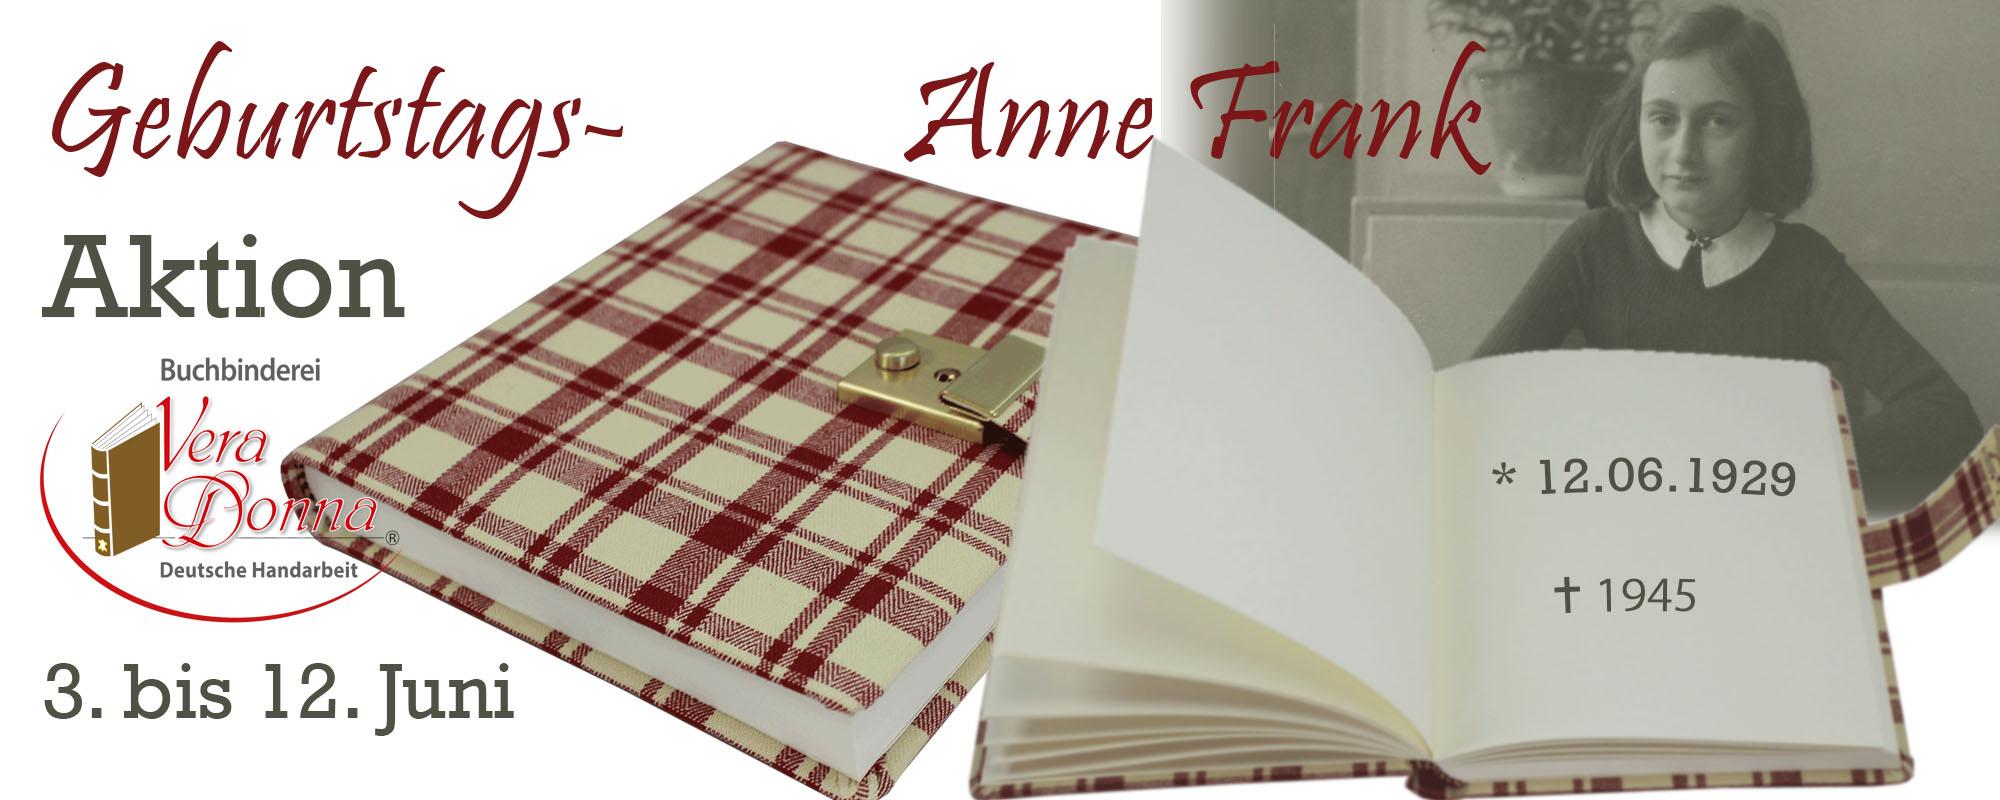 Anne Frank Geburtstag